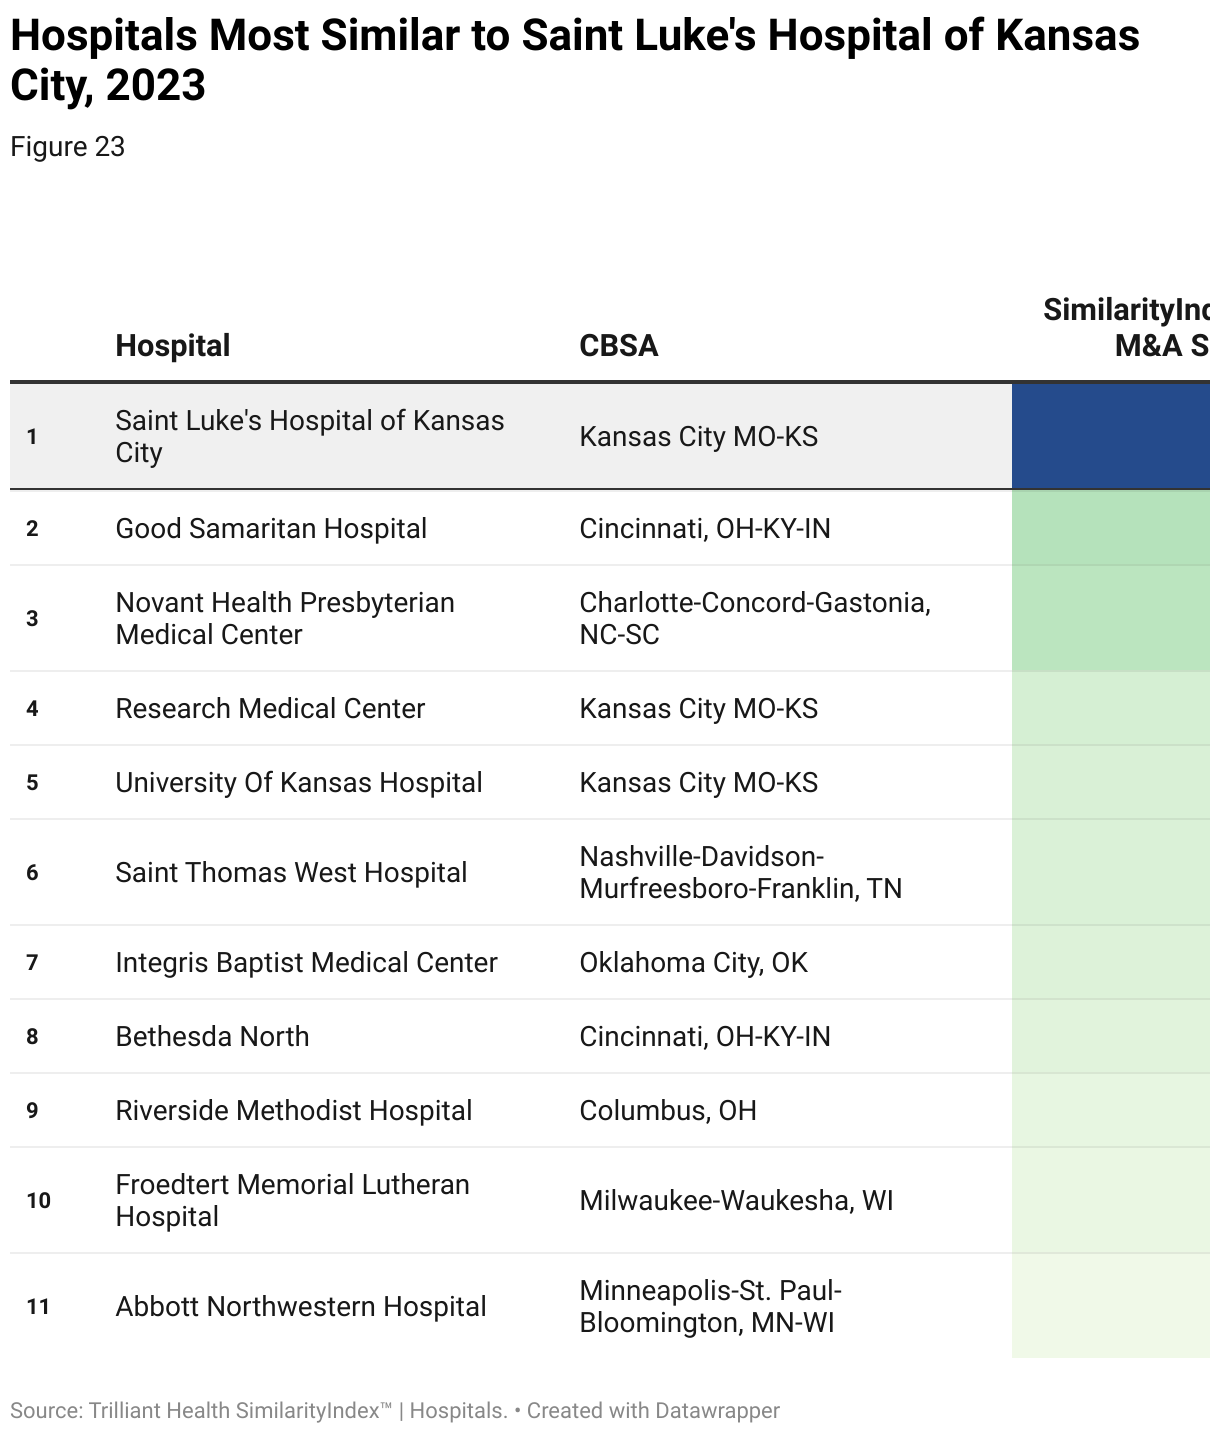 Table of the hospitals most similar to Saint Luke's Hospital of Kansas City